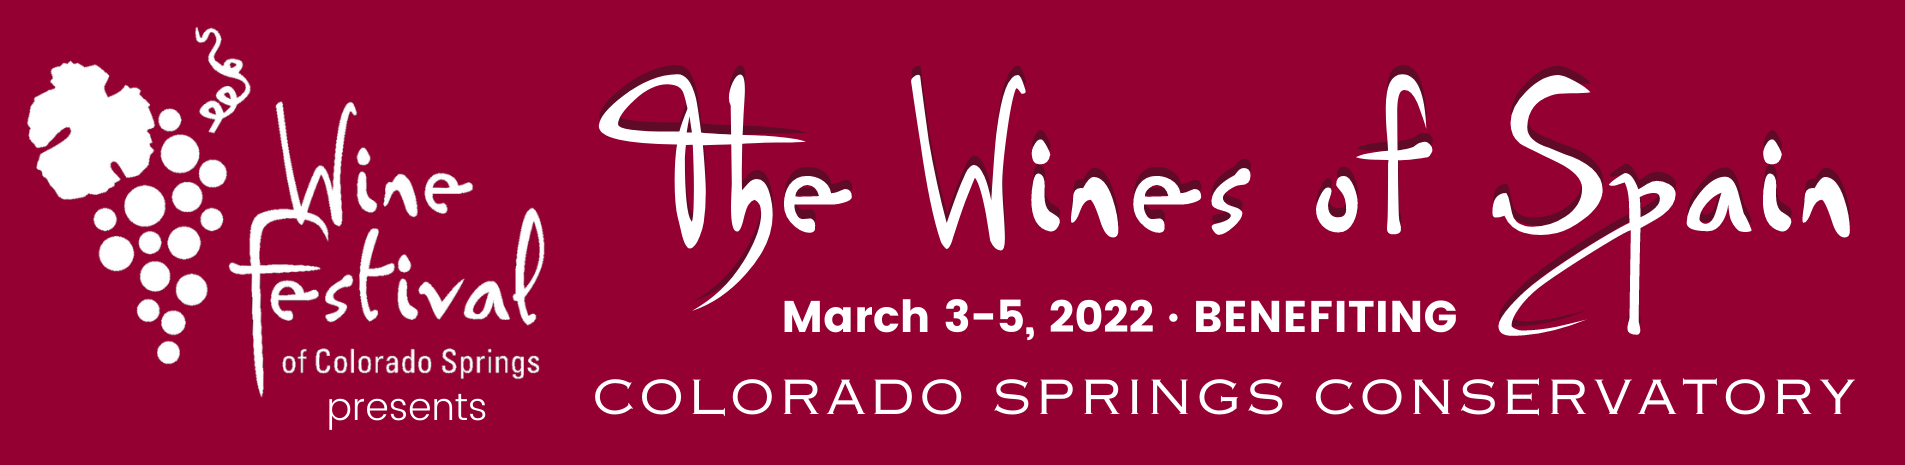 2022 Colorado Springs wine festival